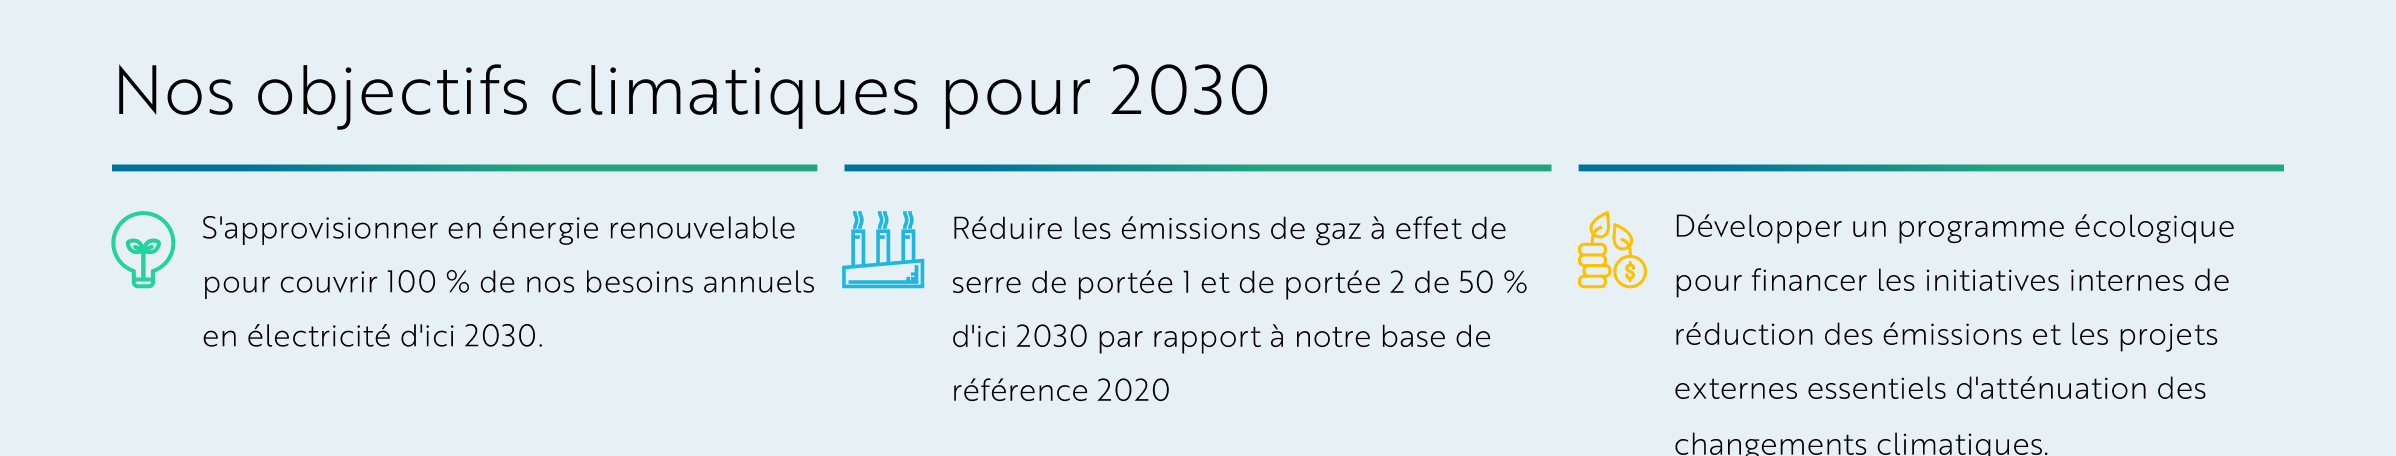 FR Translation Our 2030 Climate Goals Graphics